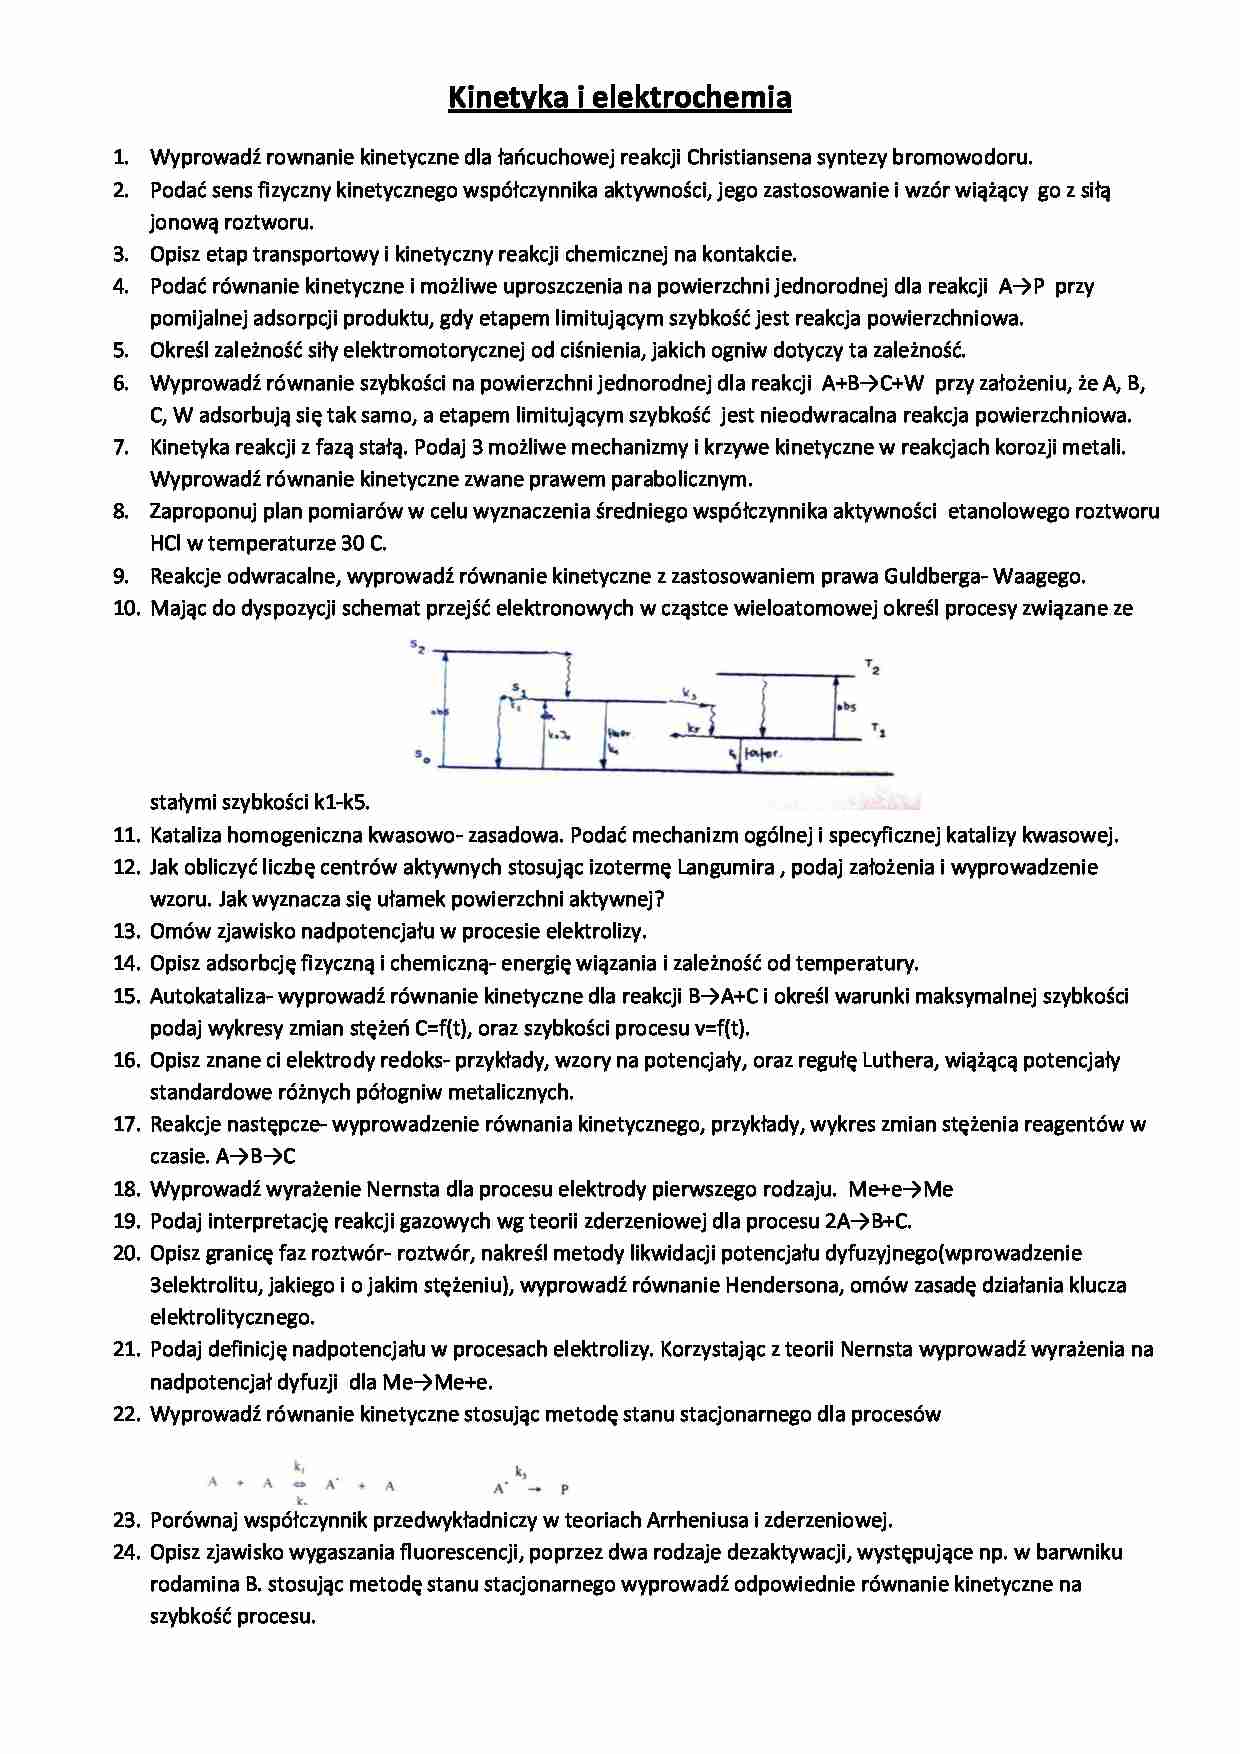 Kinetyka i elektrochemia-pytania - strona 1